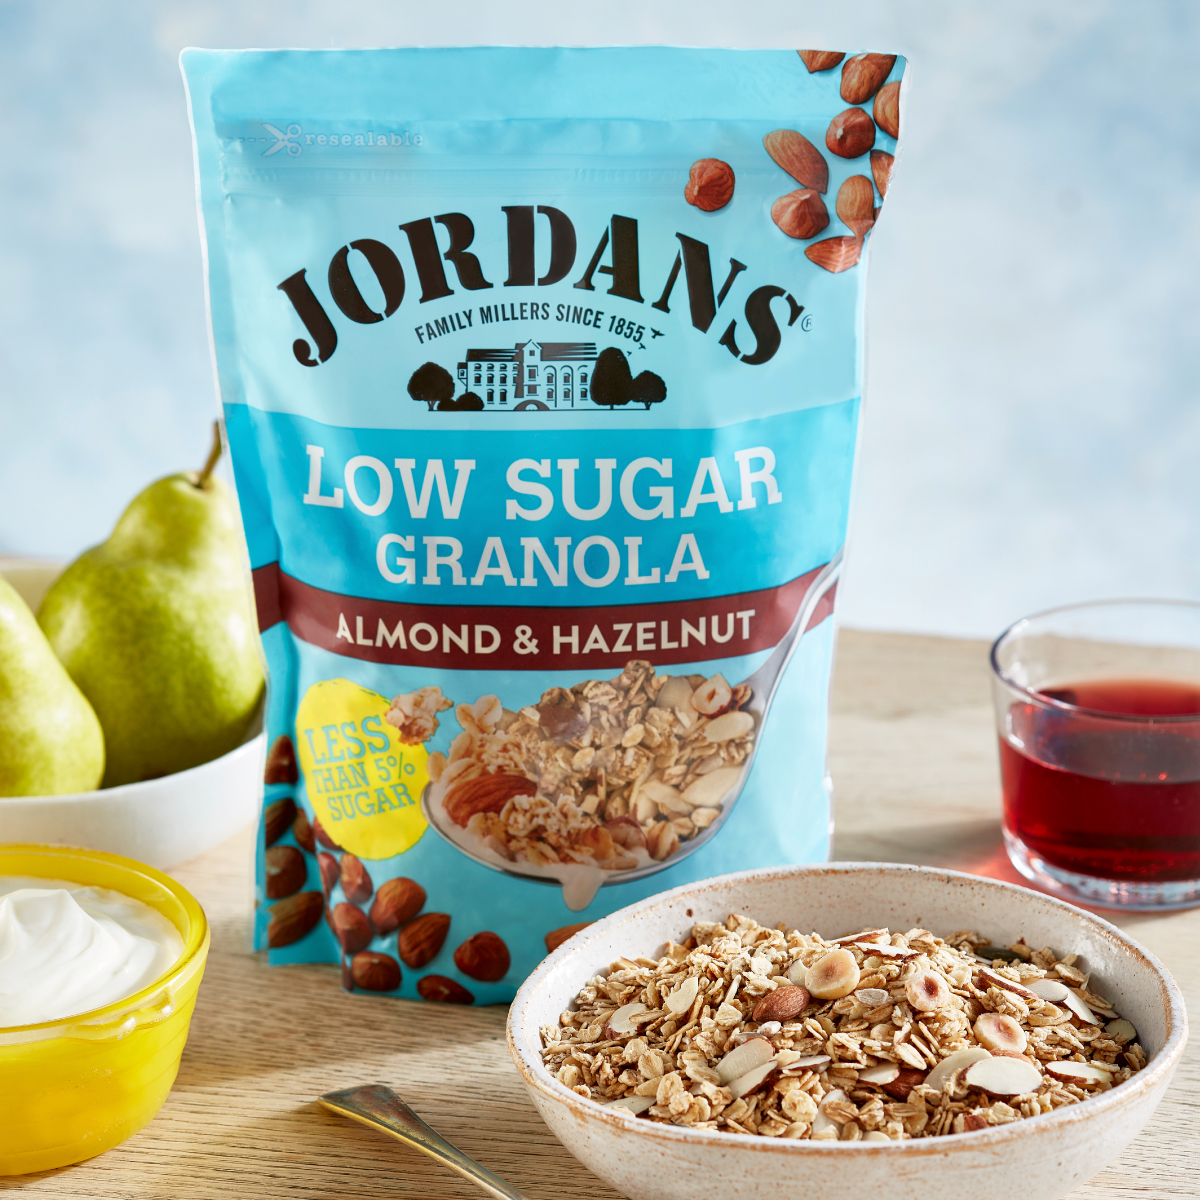 Jordans Low Sugar Granola - Almond and Hazelnut Granola Packaging design